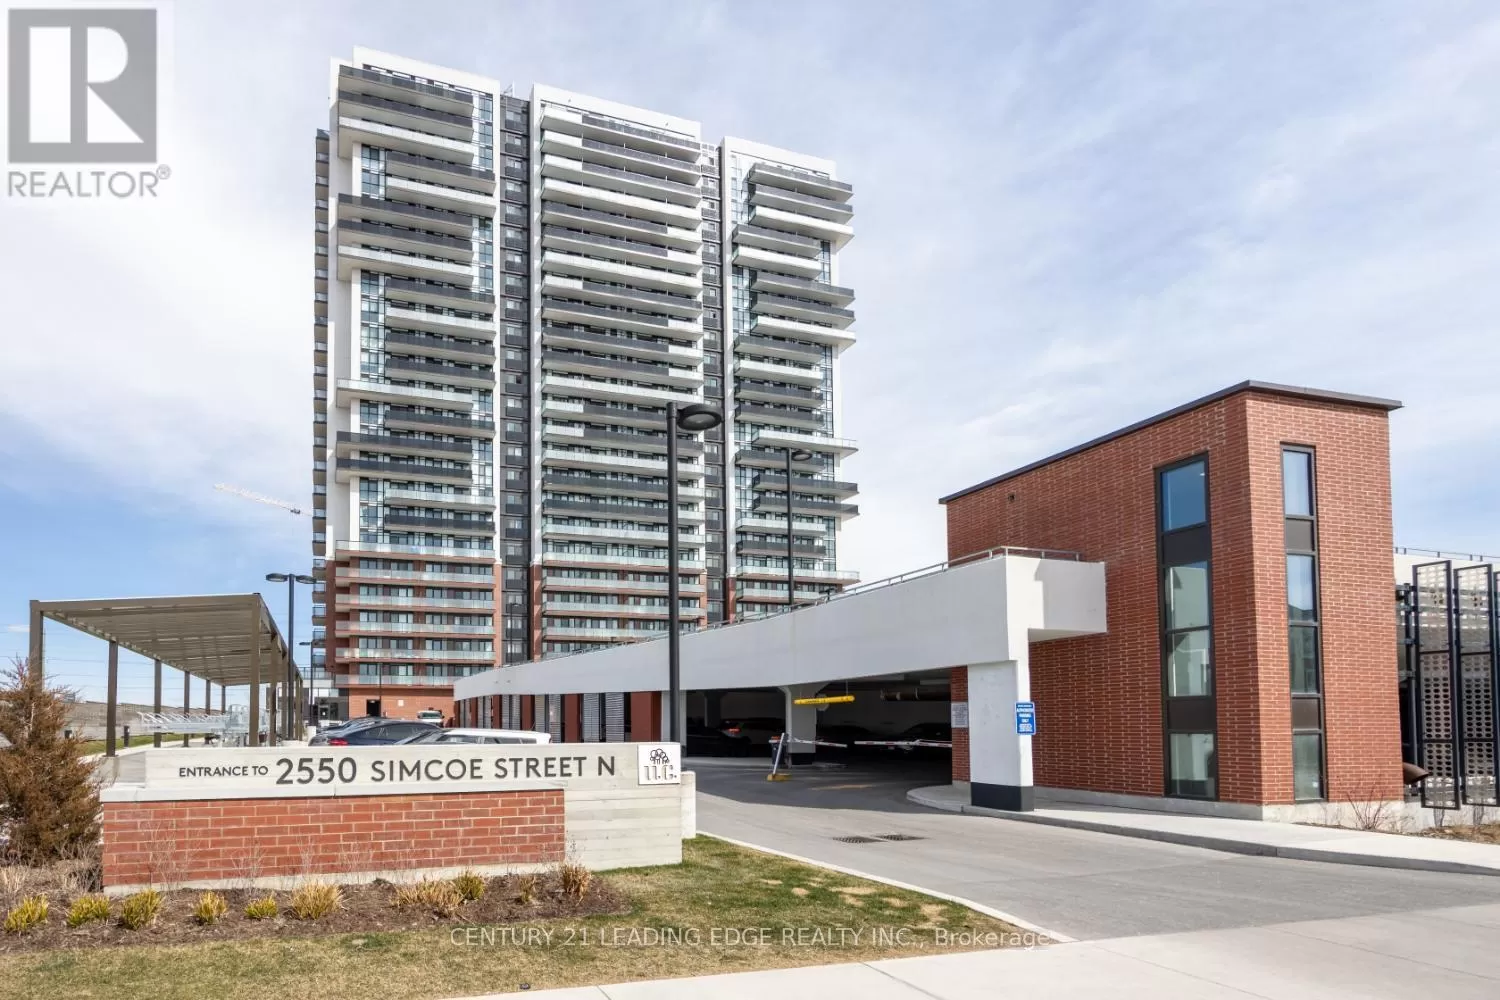 Apartment for rent: 202 - 2550 Simcoe Street N, Oshawa, Ontario L1L 0R5